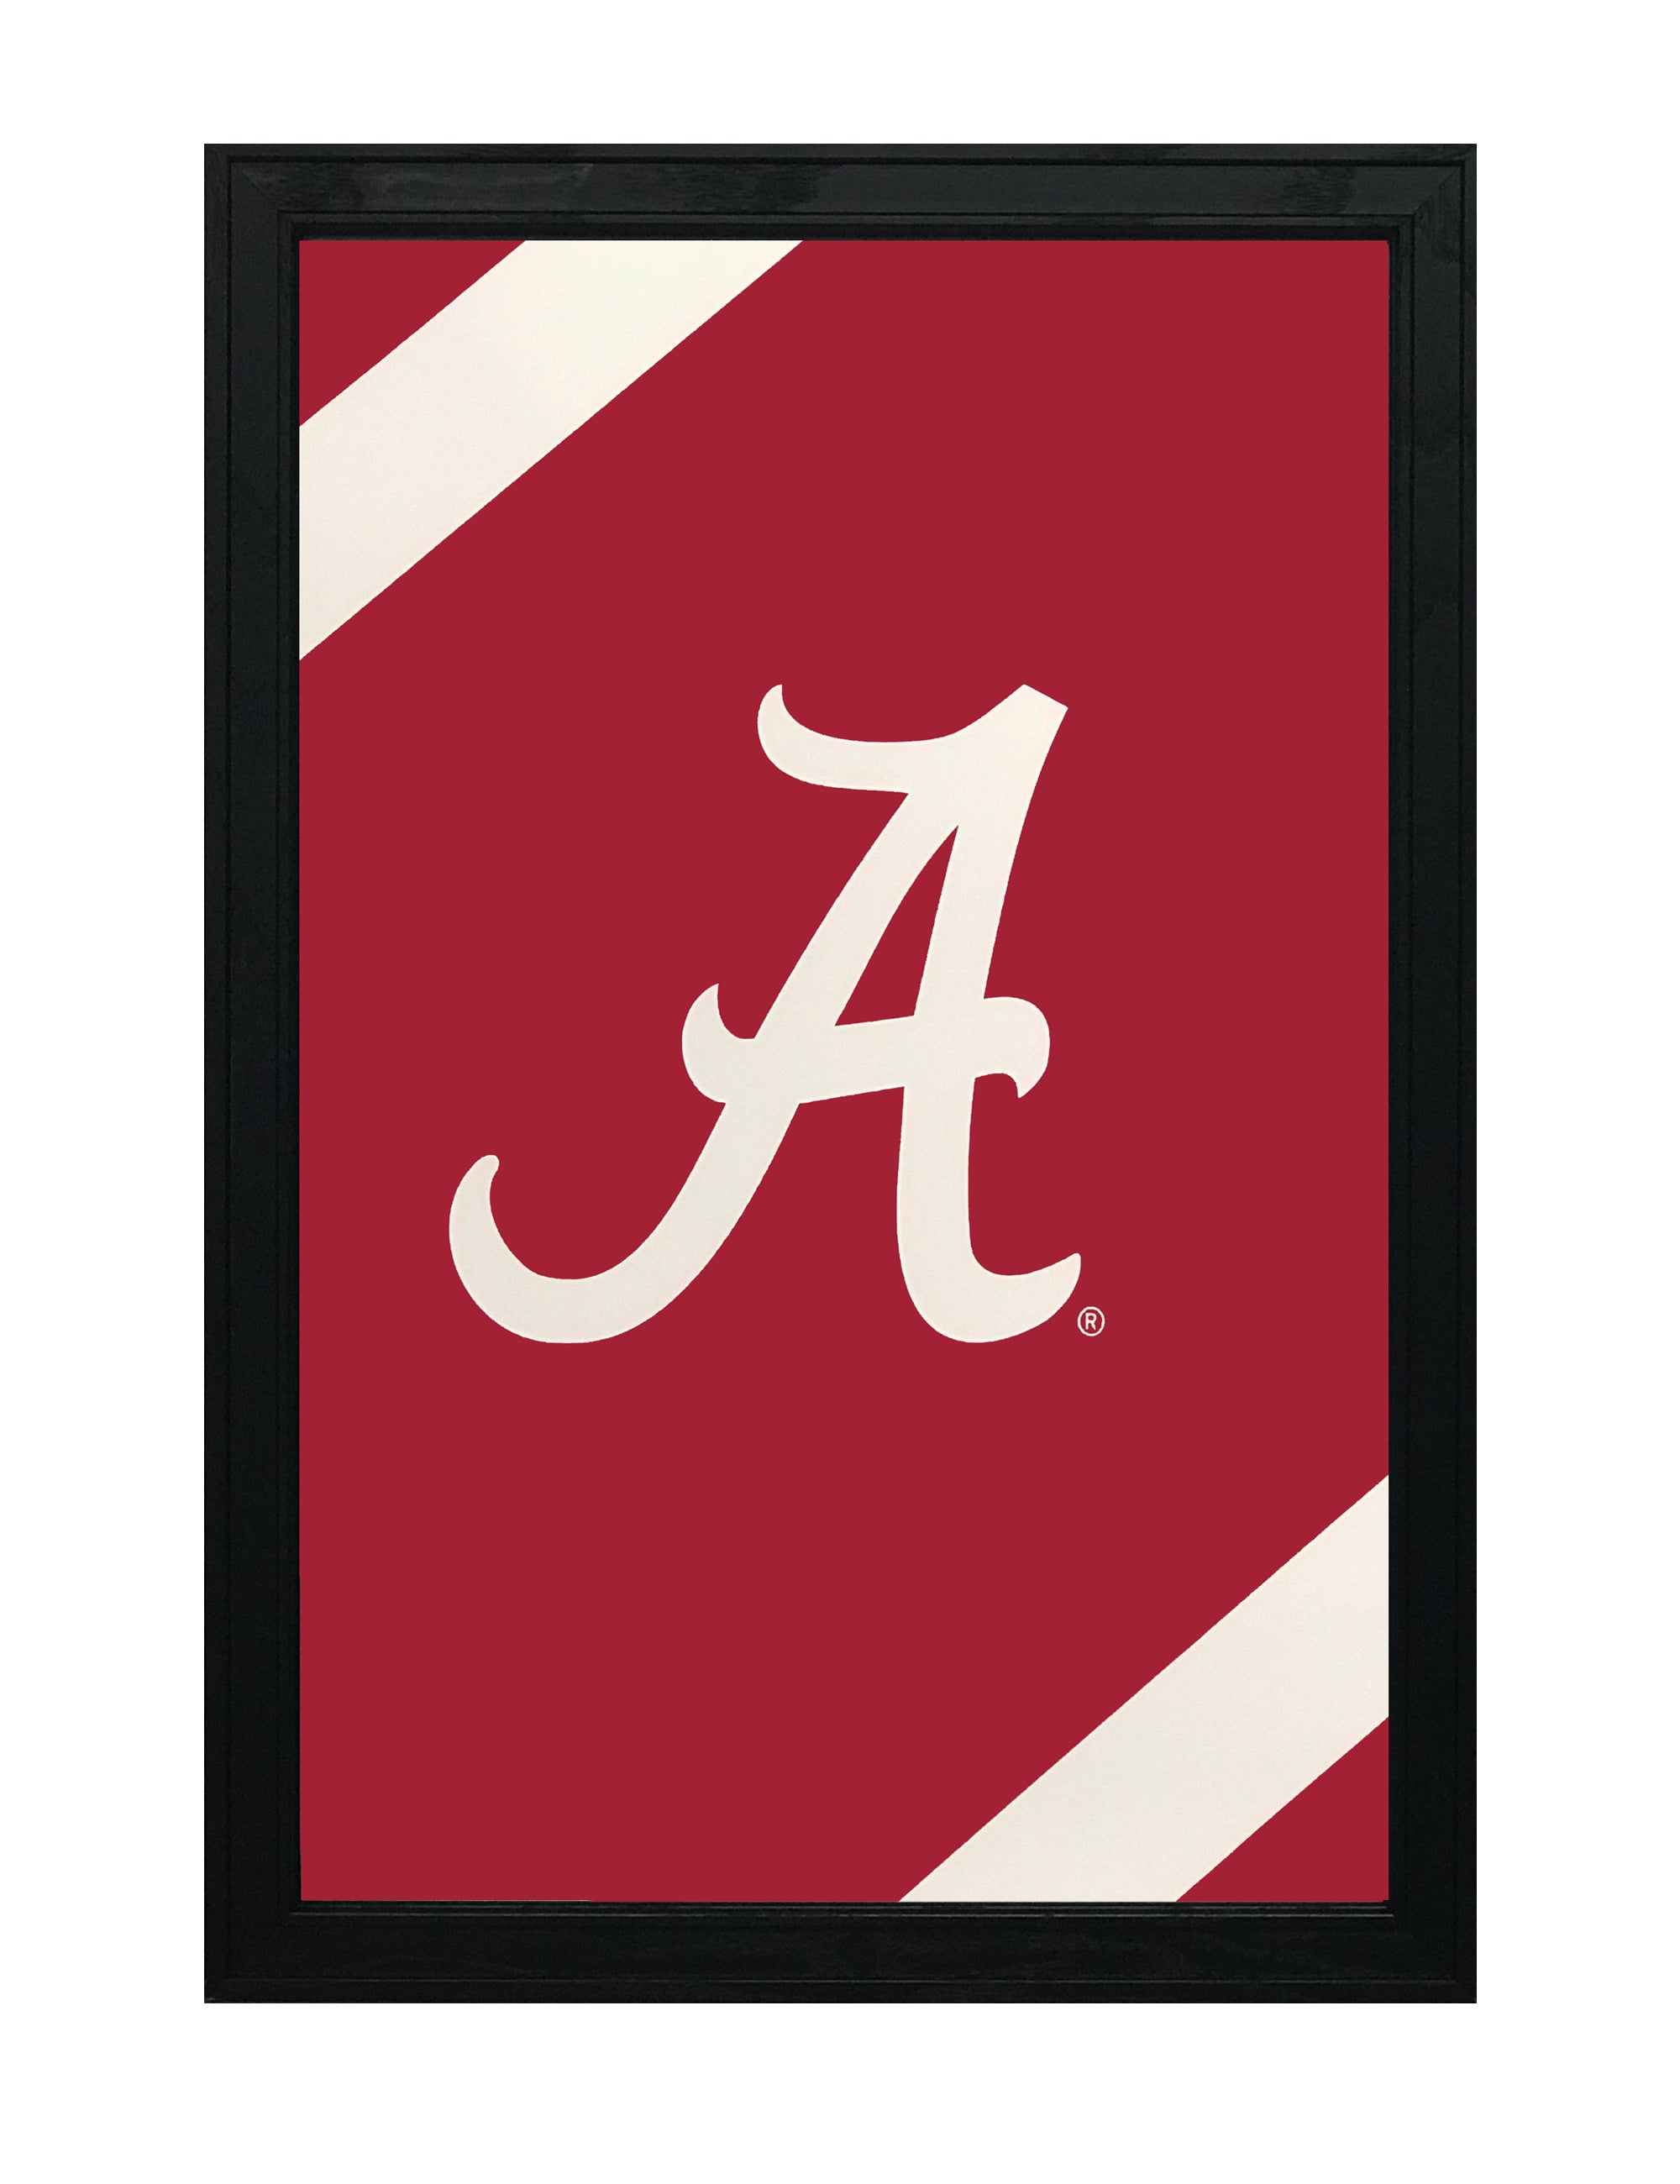 Limited Edition Alabama Crimson Tide Logo with Football Stripes Poster Art  - 13x19